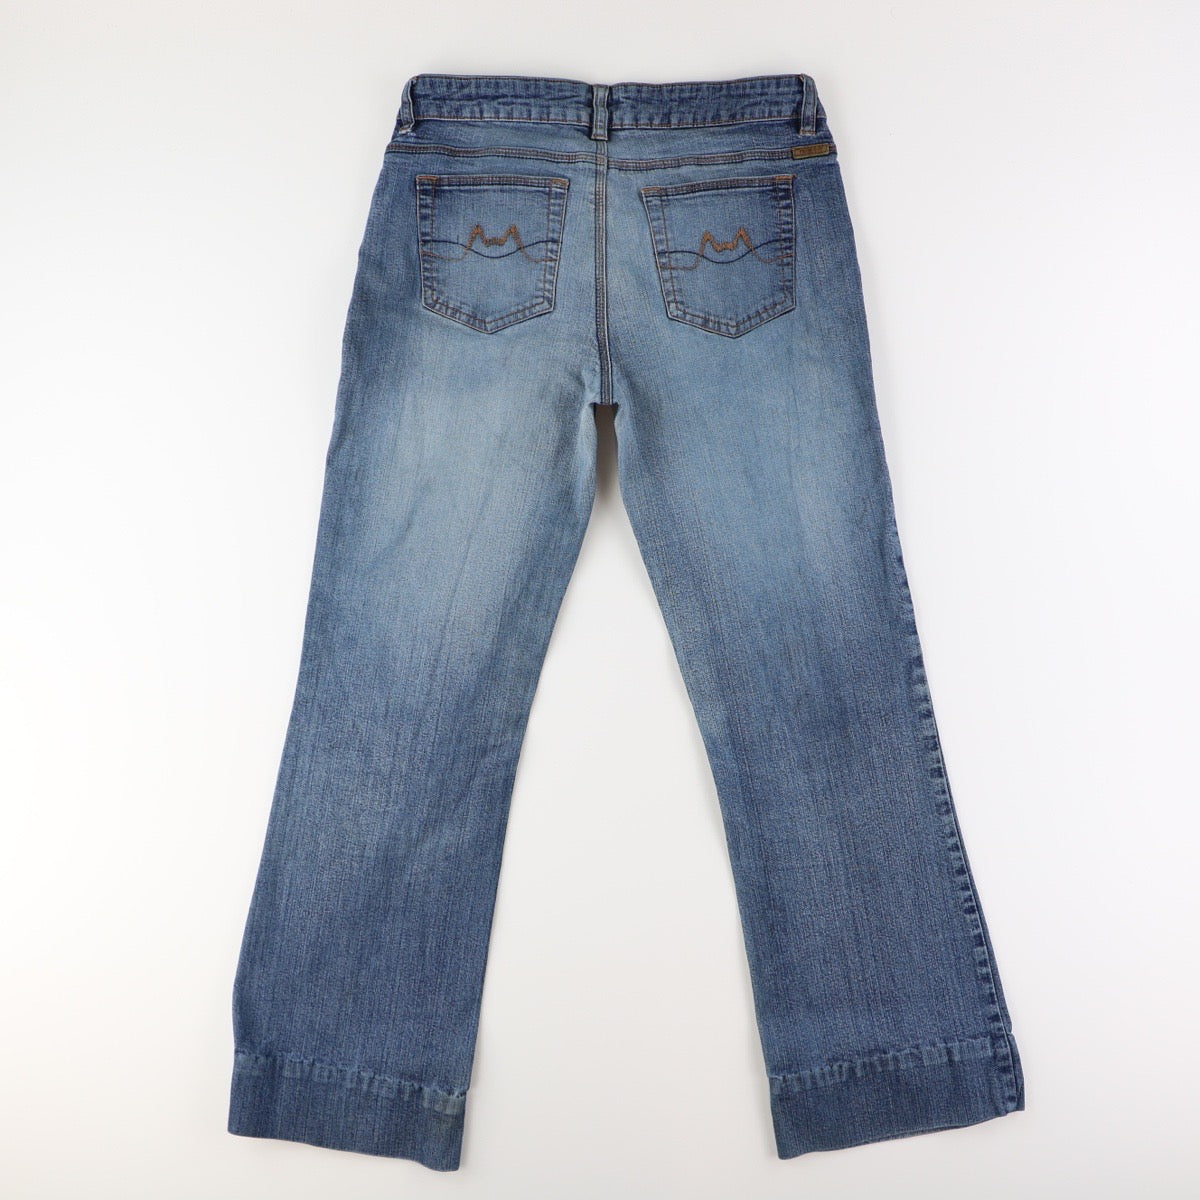 Vintage Jeans (30)